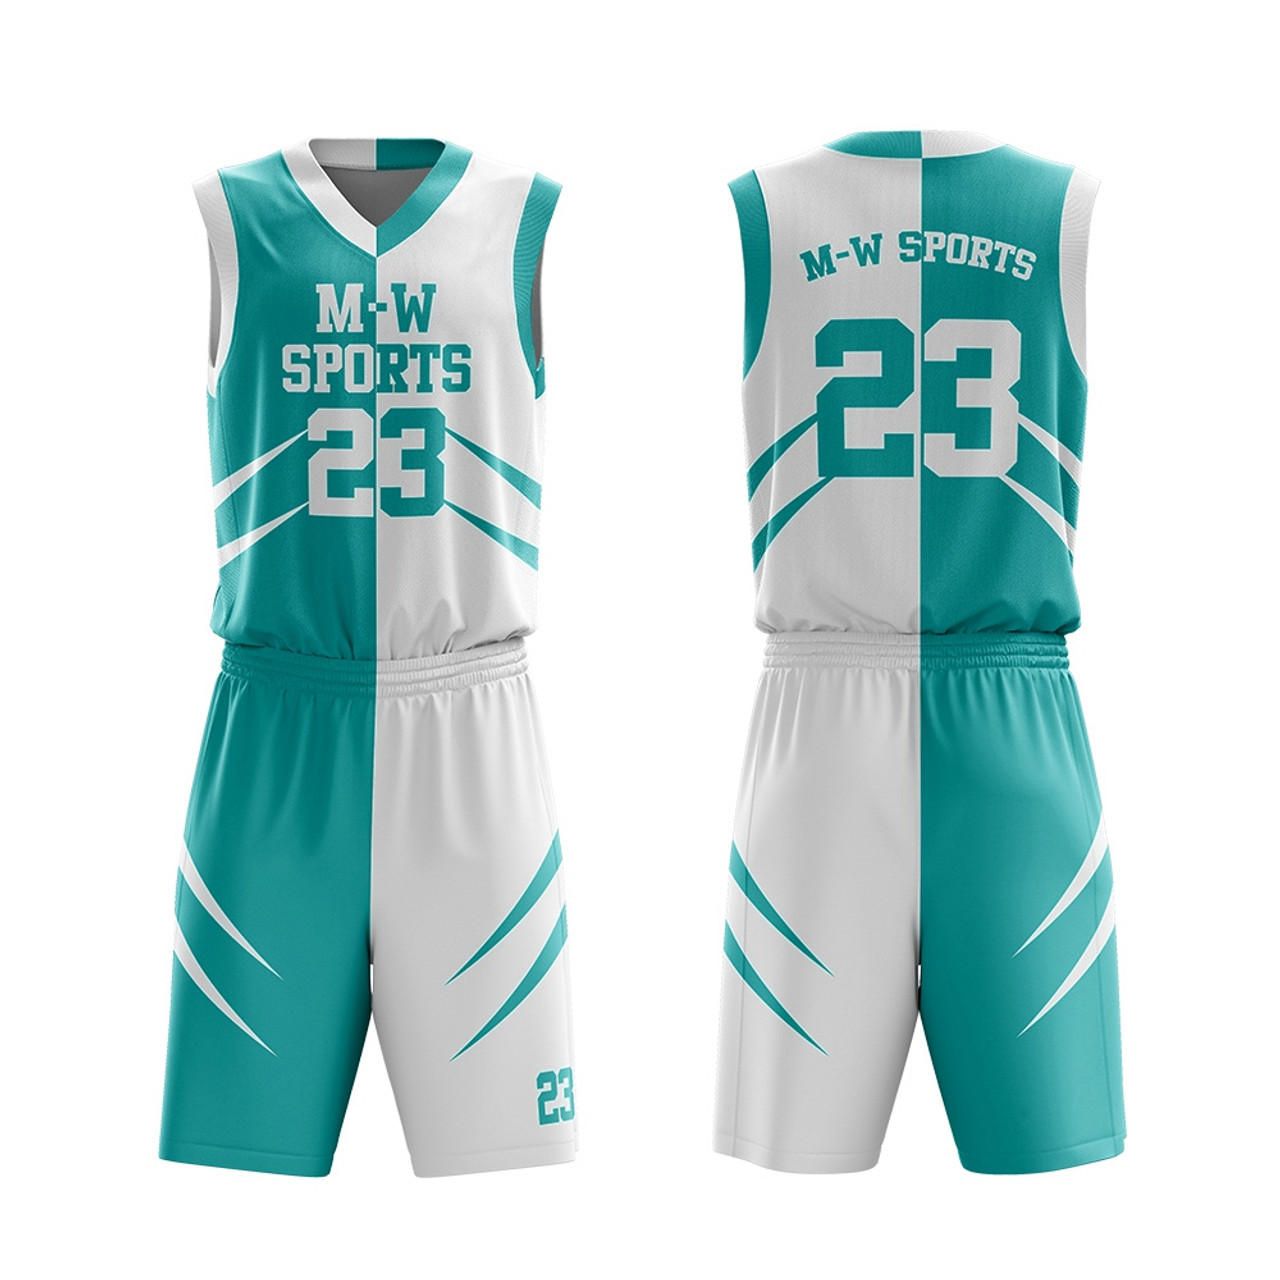 High Quality Sublimation Two Tone Customized Lightning Pattern Personalized Basketball  Uniform Team Clothing Shirts And Shorts